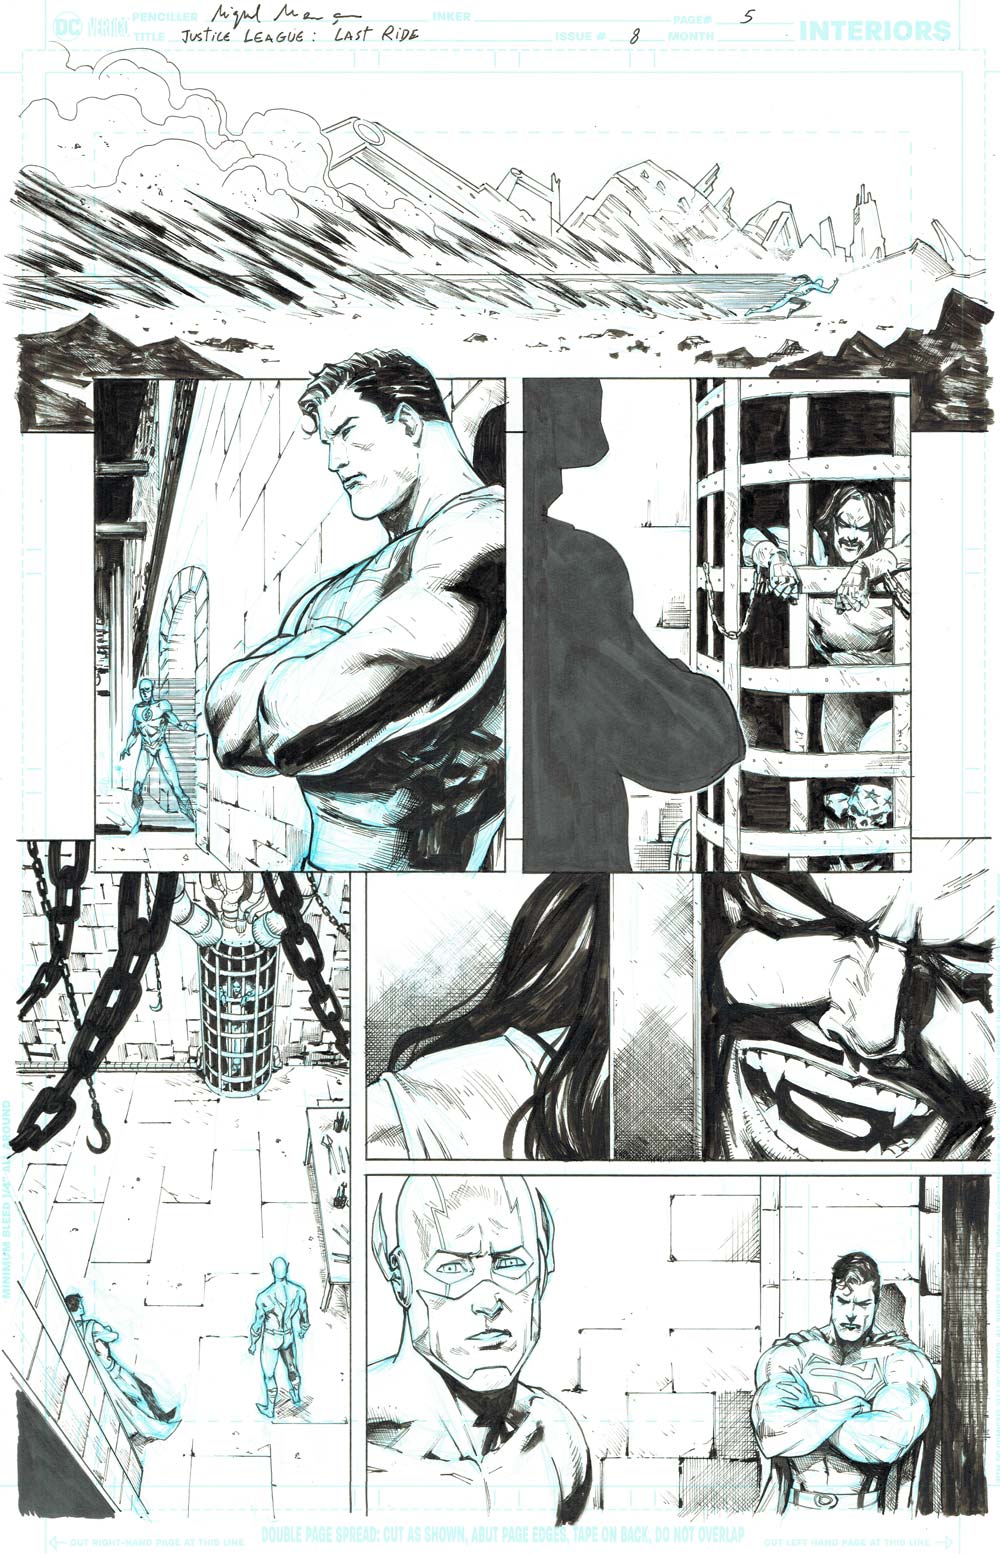 Justice League - Last Ride #4 (Page 15)